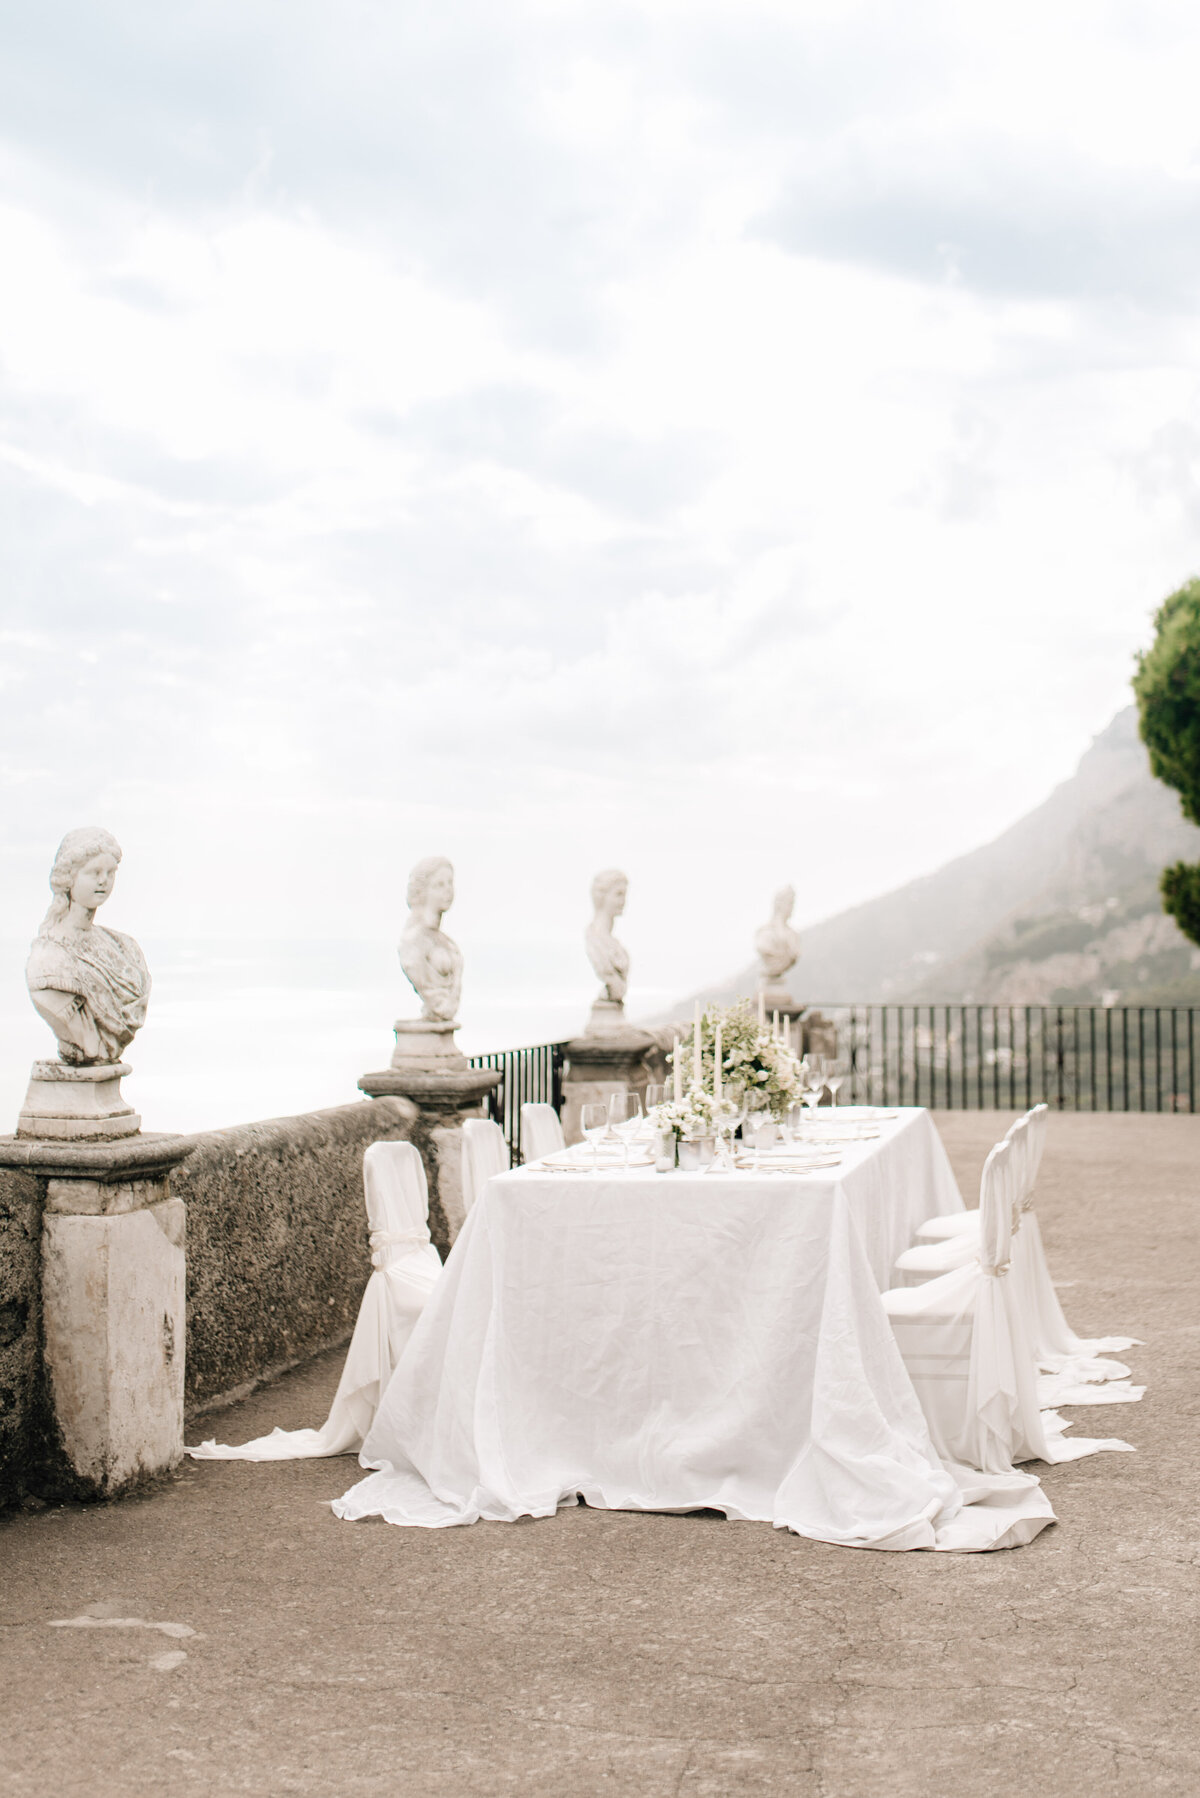 Flora_And_Grace_Amalfi_Coast_Villa_Cimbrone_Luxury_Wedding_Photographer-12